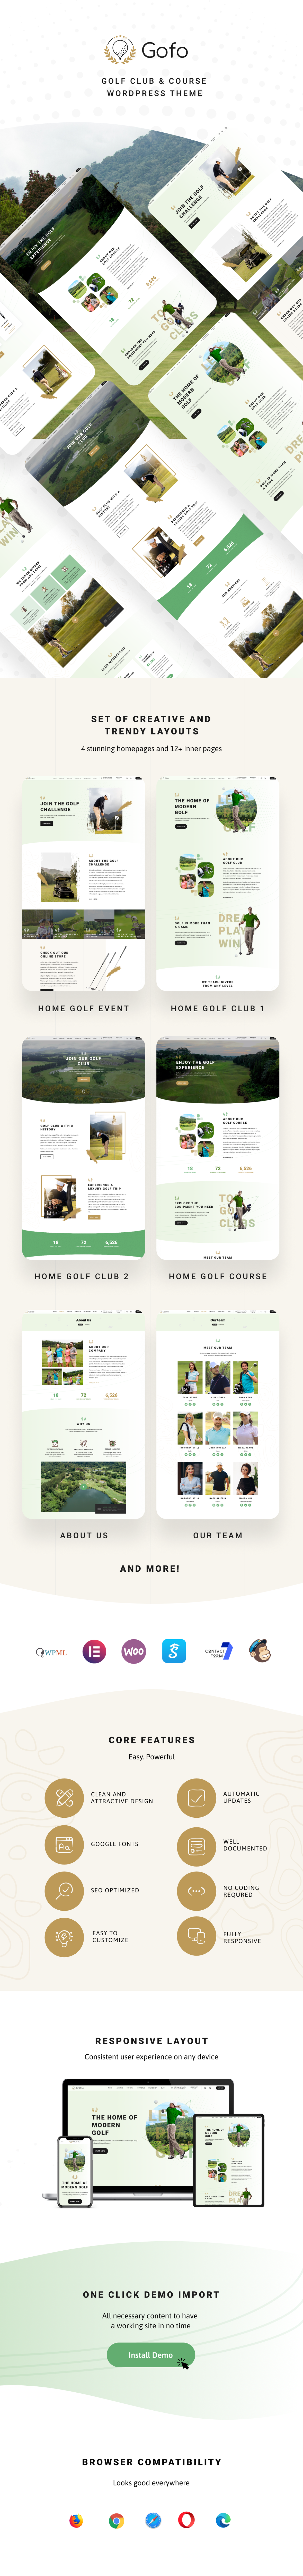 Gofo - Golf Club & Course WordPress Theme.